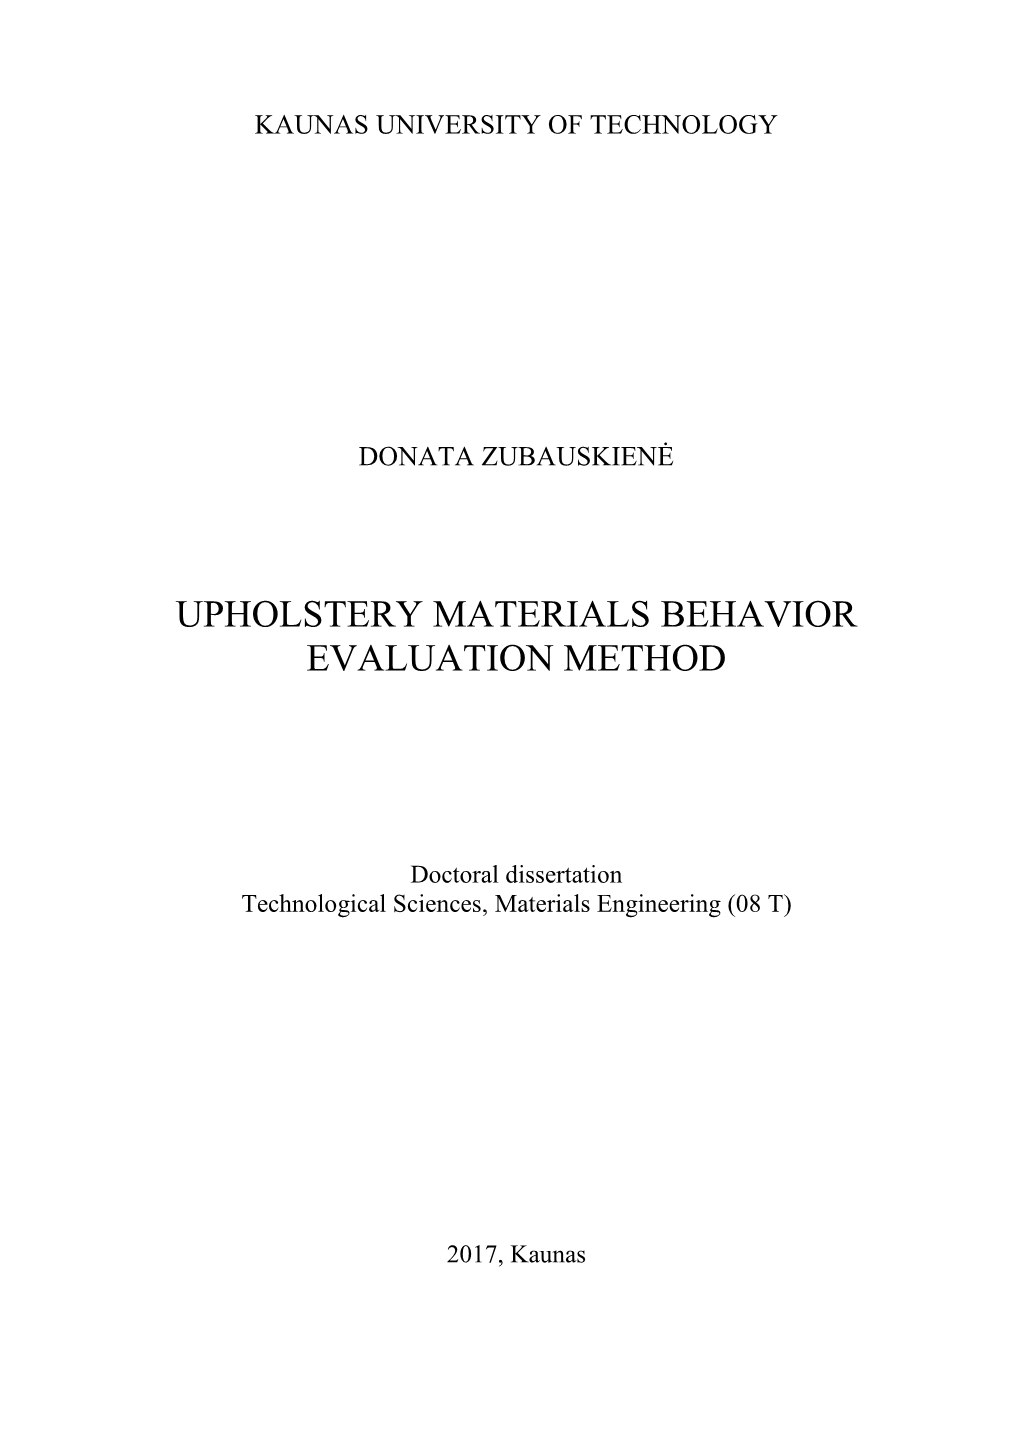 Upholstery Materials Behavior Evaluation Method